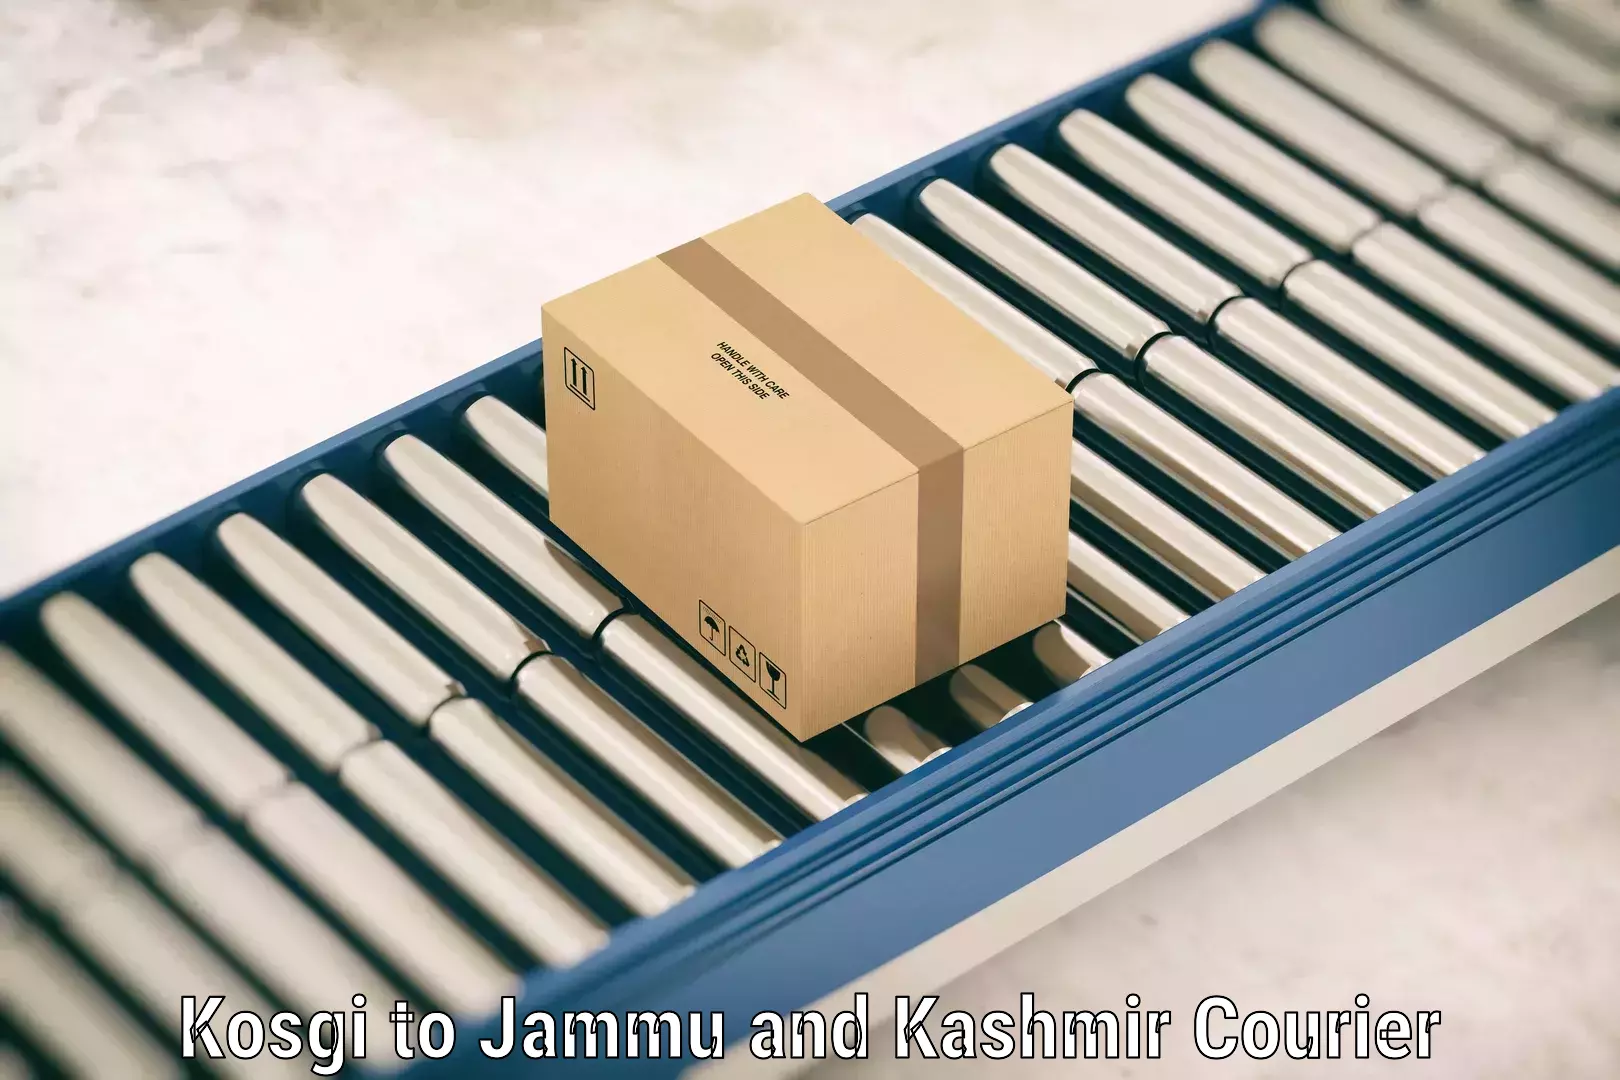 Luggage transit service Kosgi to University of Jammu